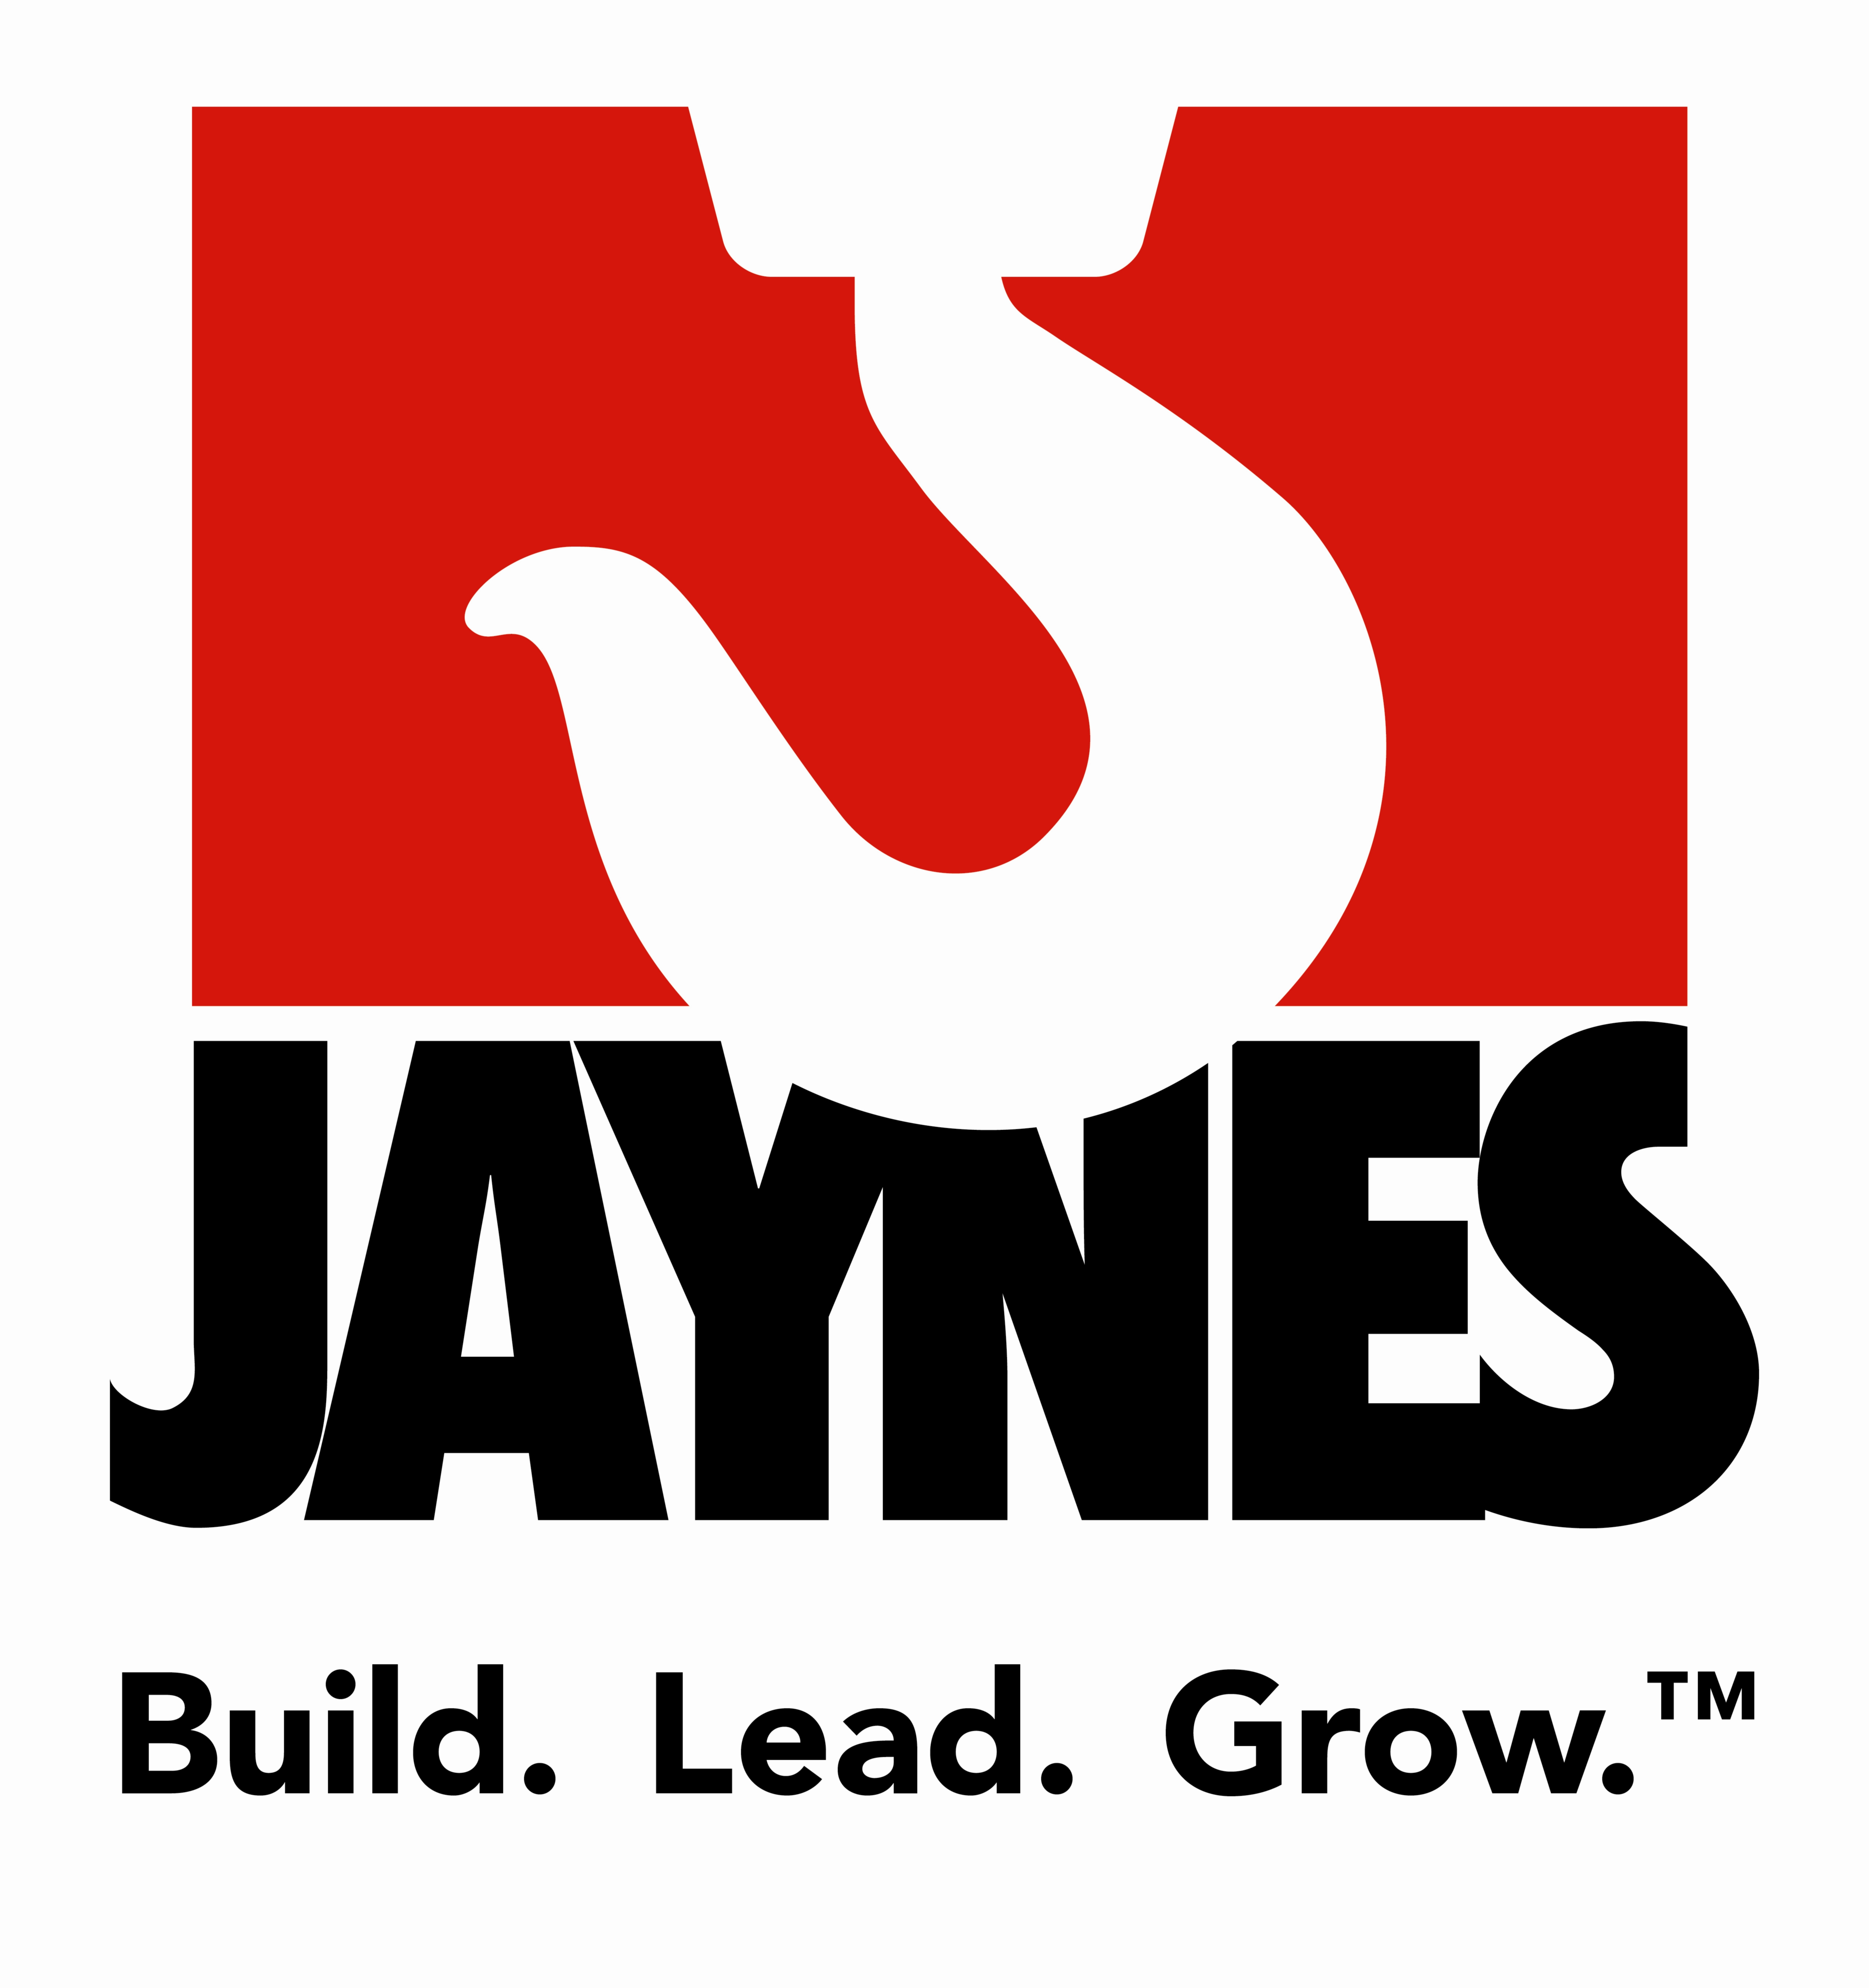 Jaynes Corporation